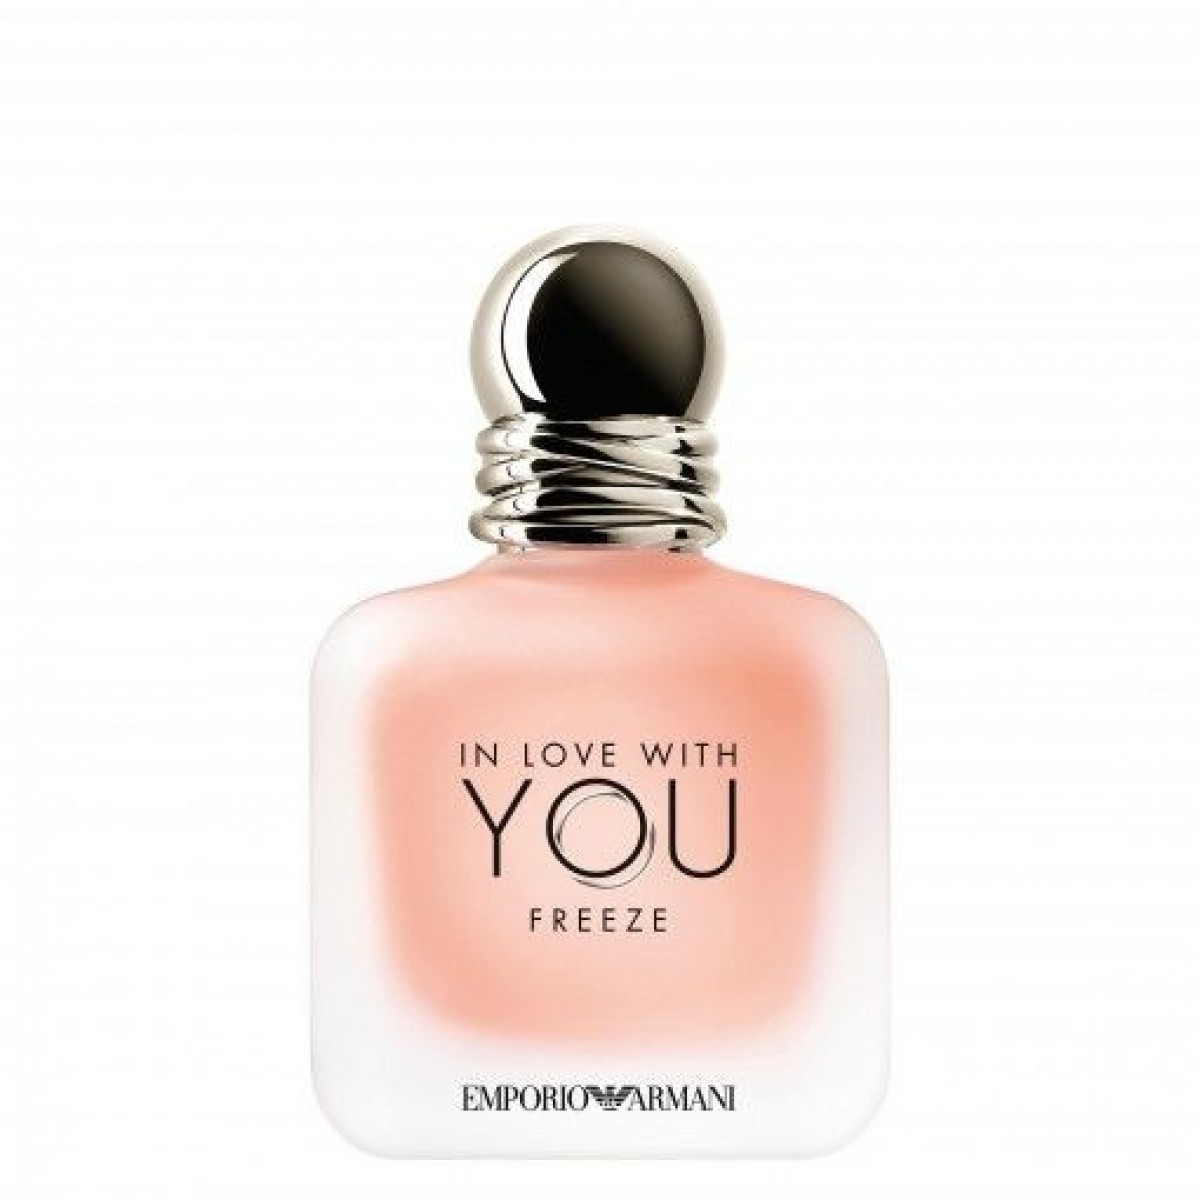 Emporio Armani In Love With You Freeze Eau de Parfum